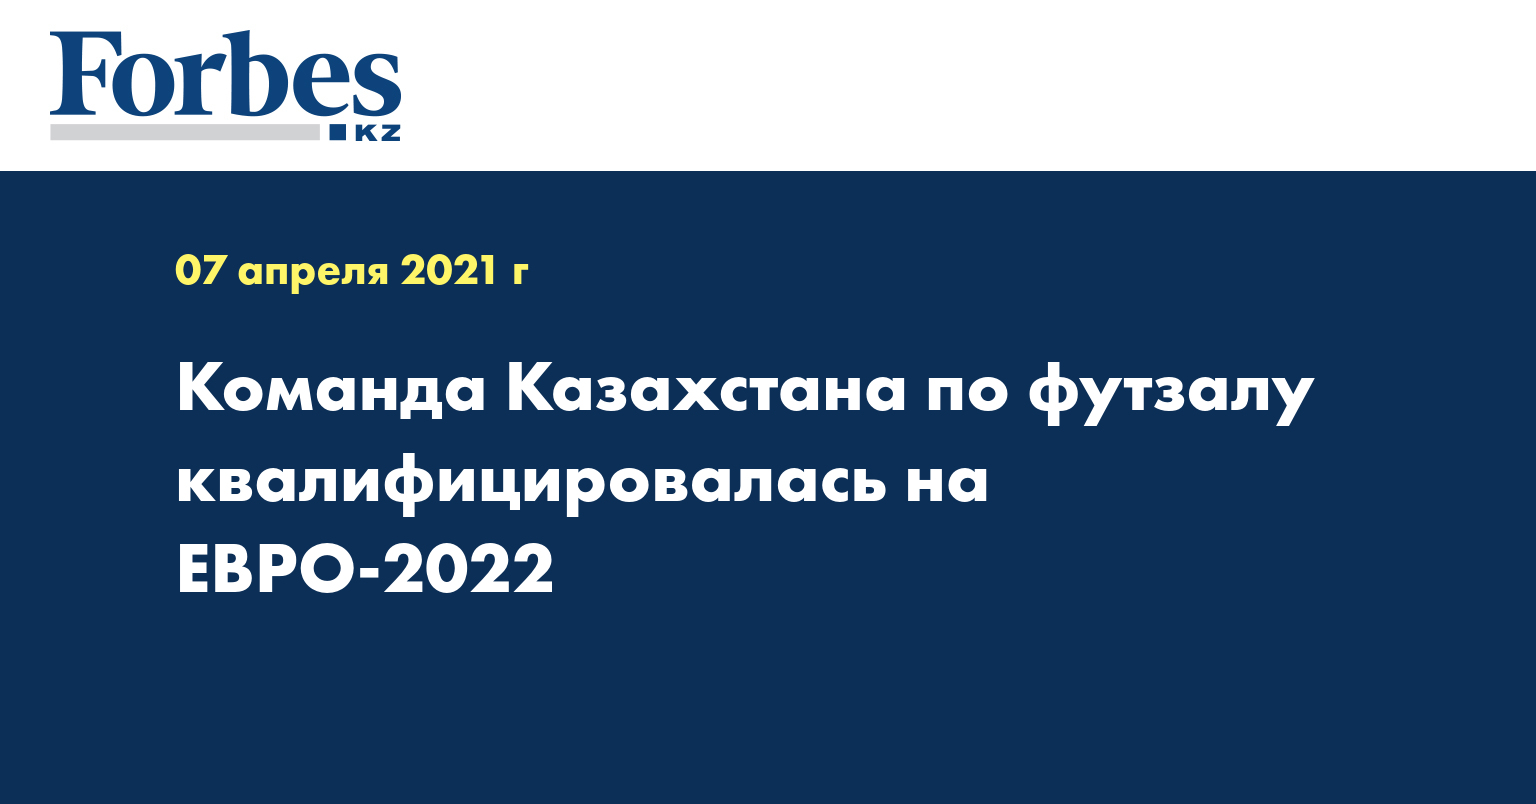 Команда Казахстана по футзалу квалифицировалась на Евро-2022